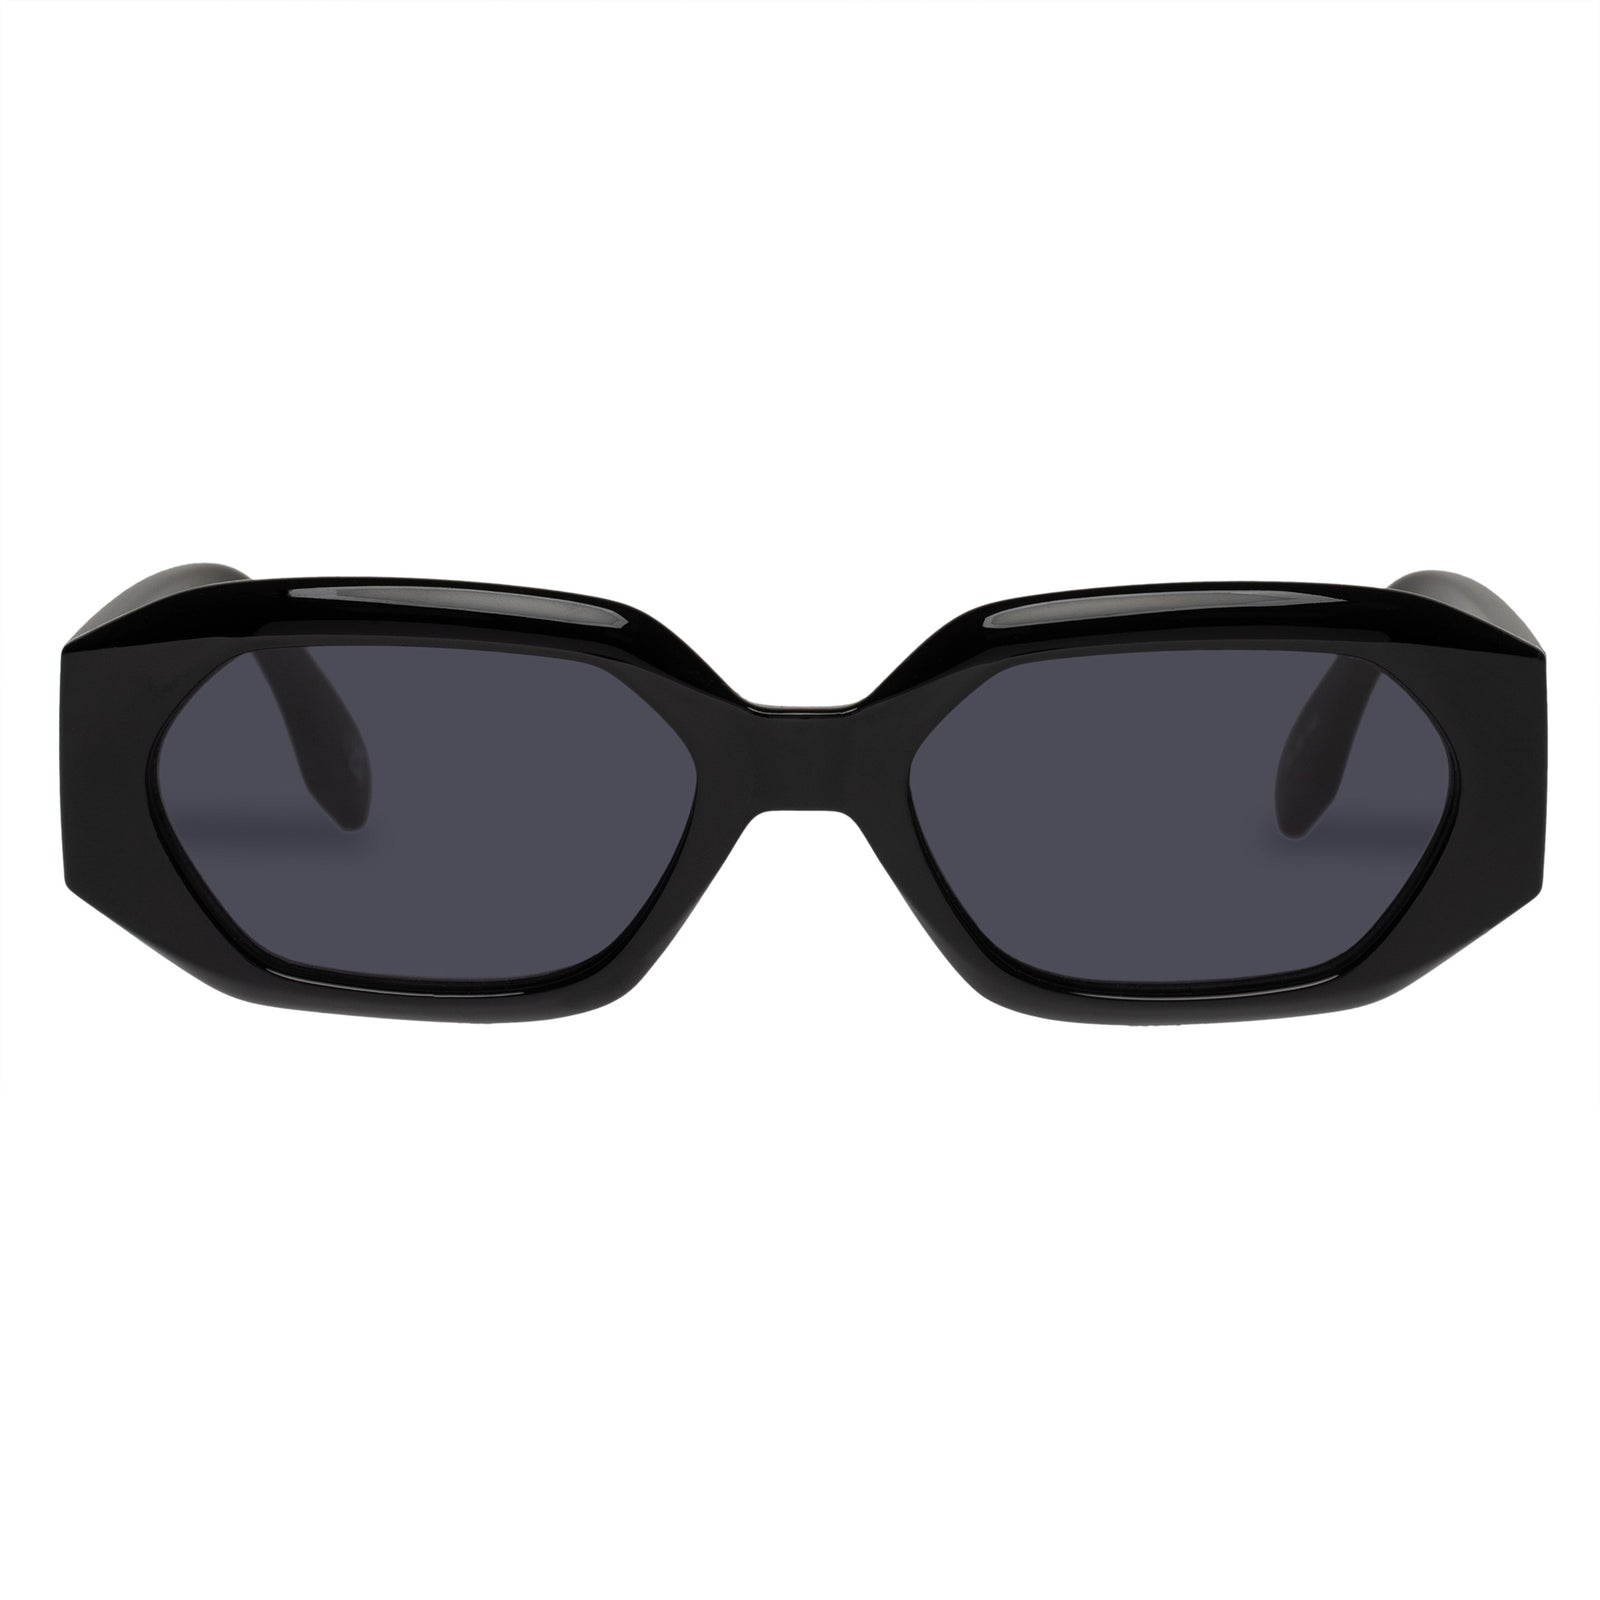 Rectangle Sunglasses Are the Season's Winning Accessory